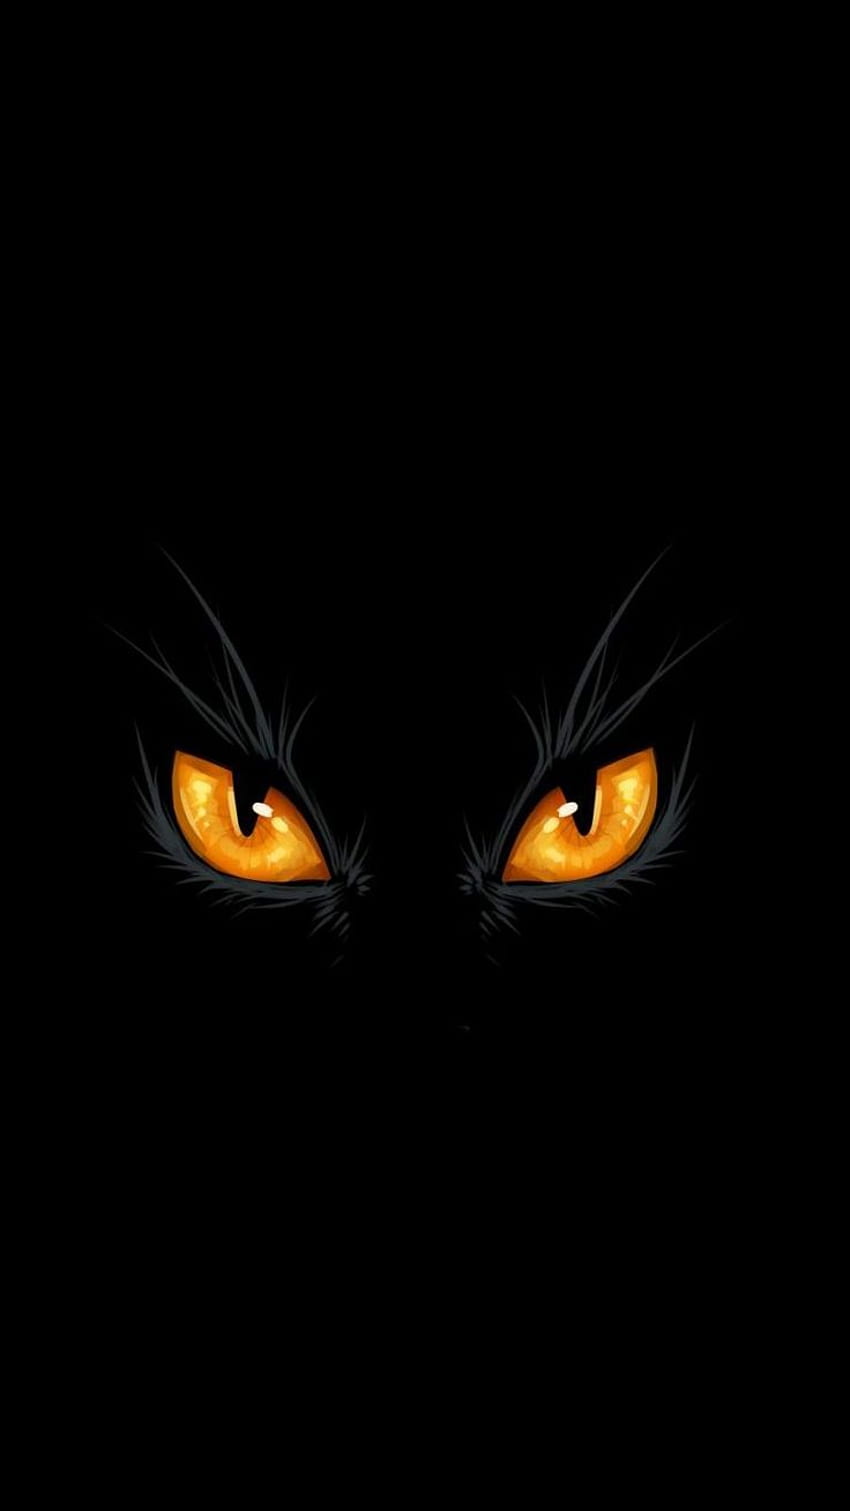 IPhone Olhos de Gato Preto, Olhos no Escuro Papel de parede de celular HD